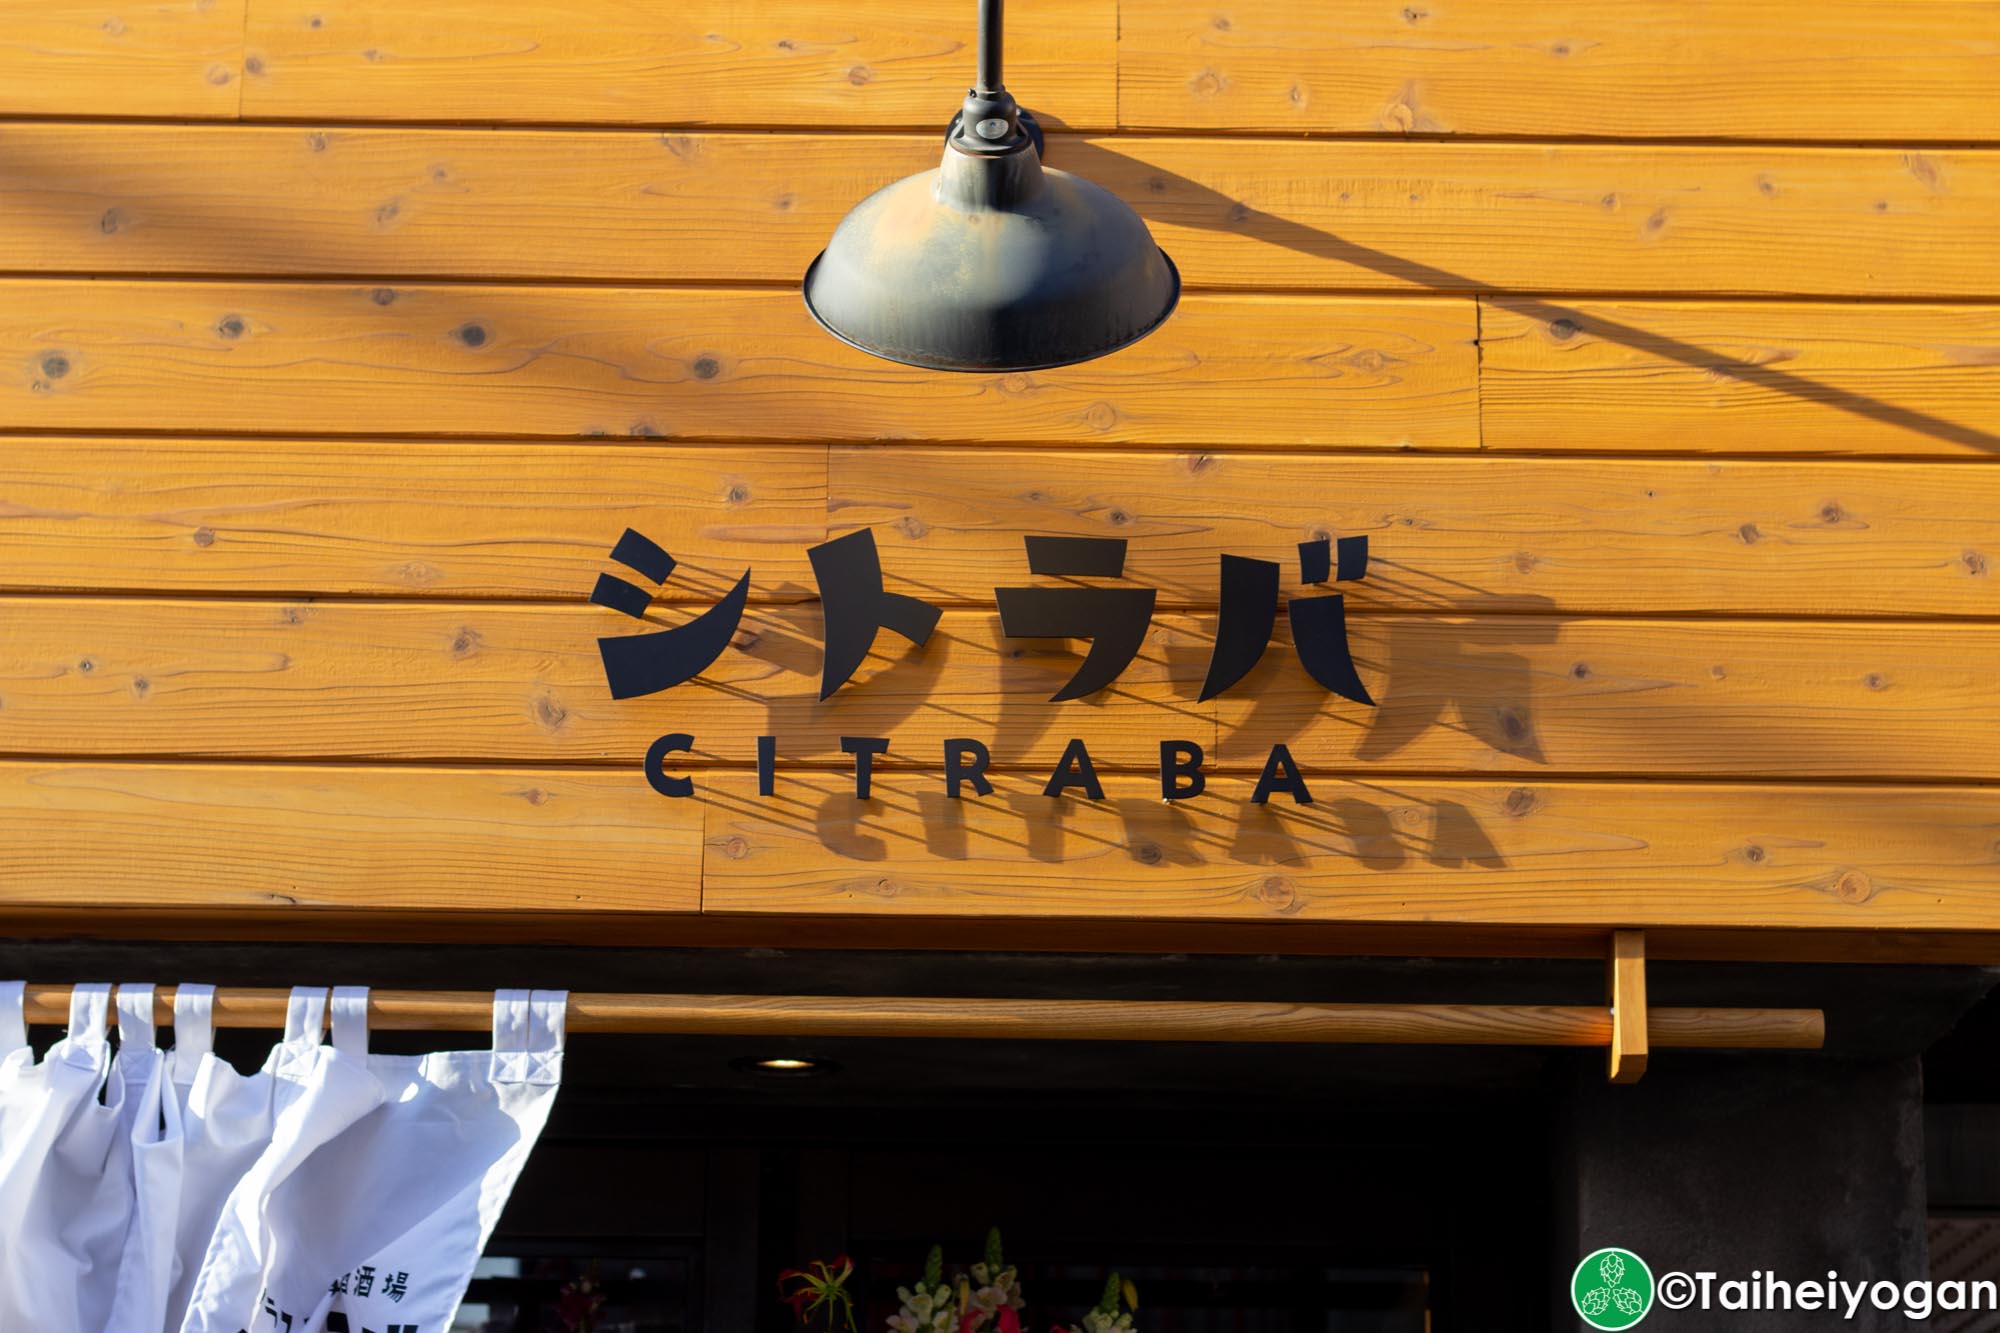 Citraba (シトラバ) - Entrance Sign